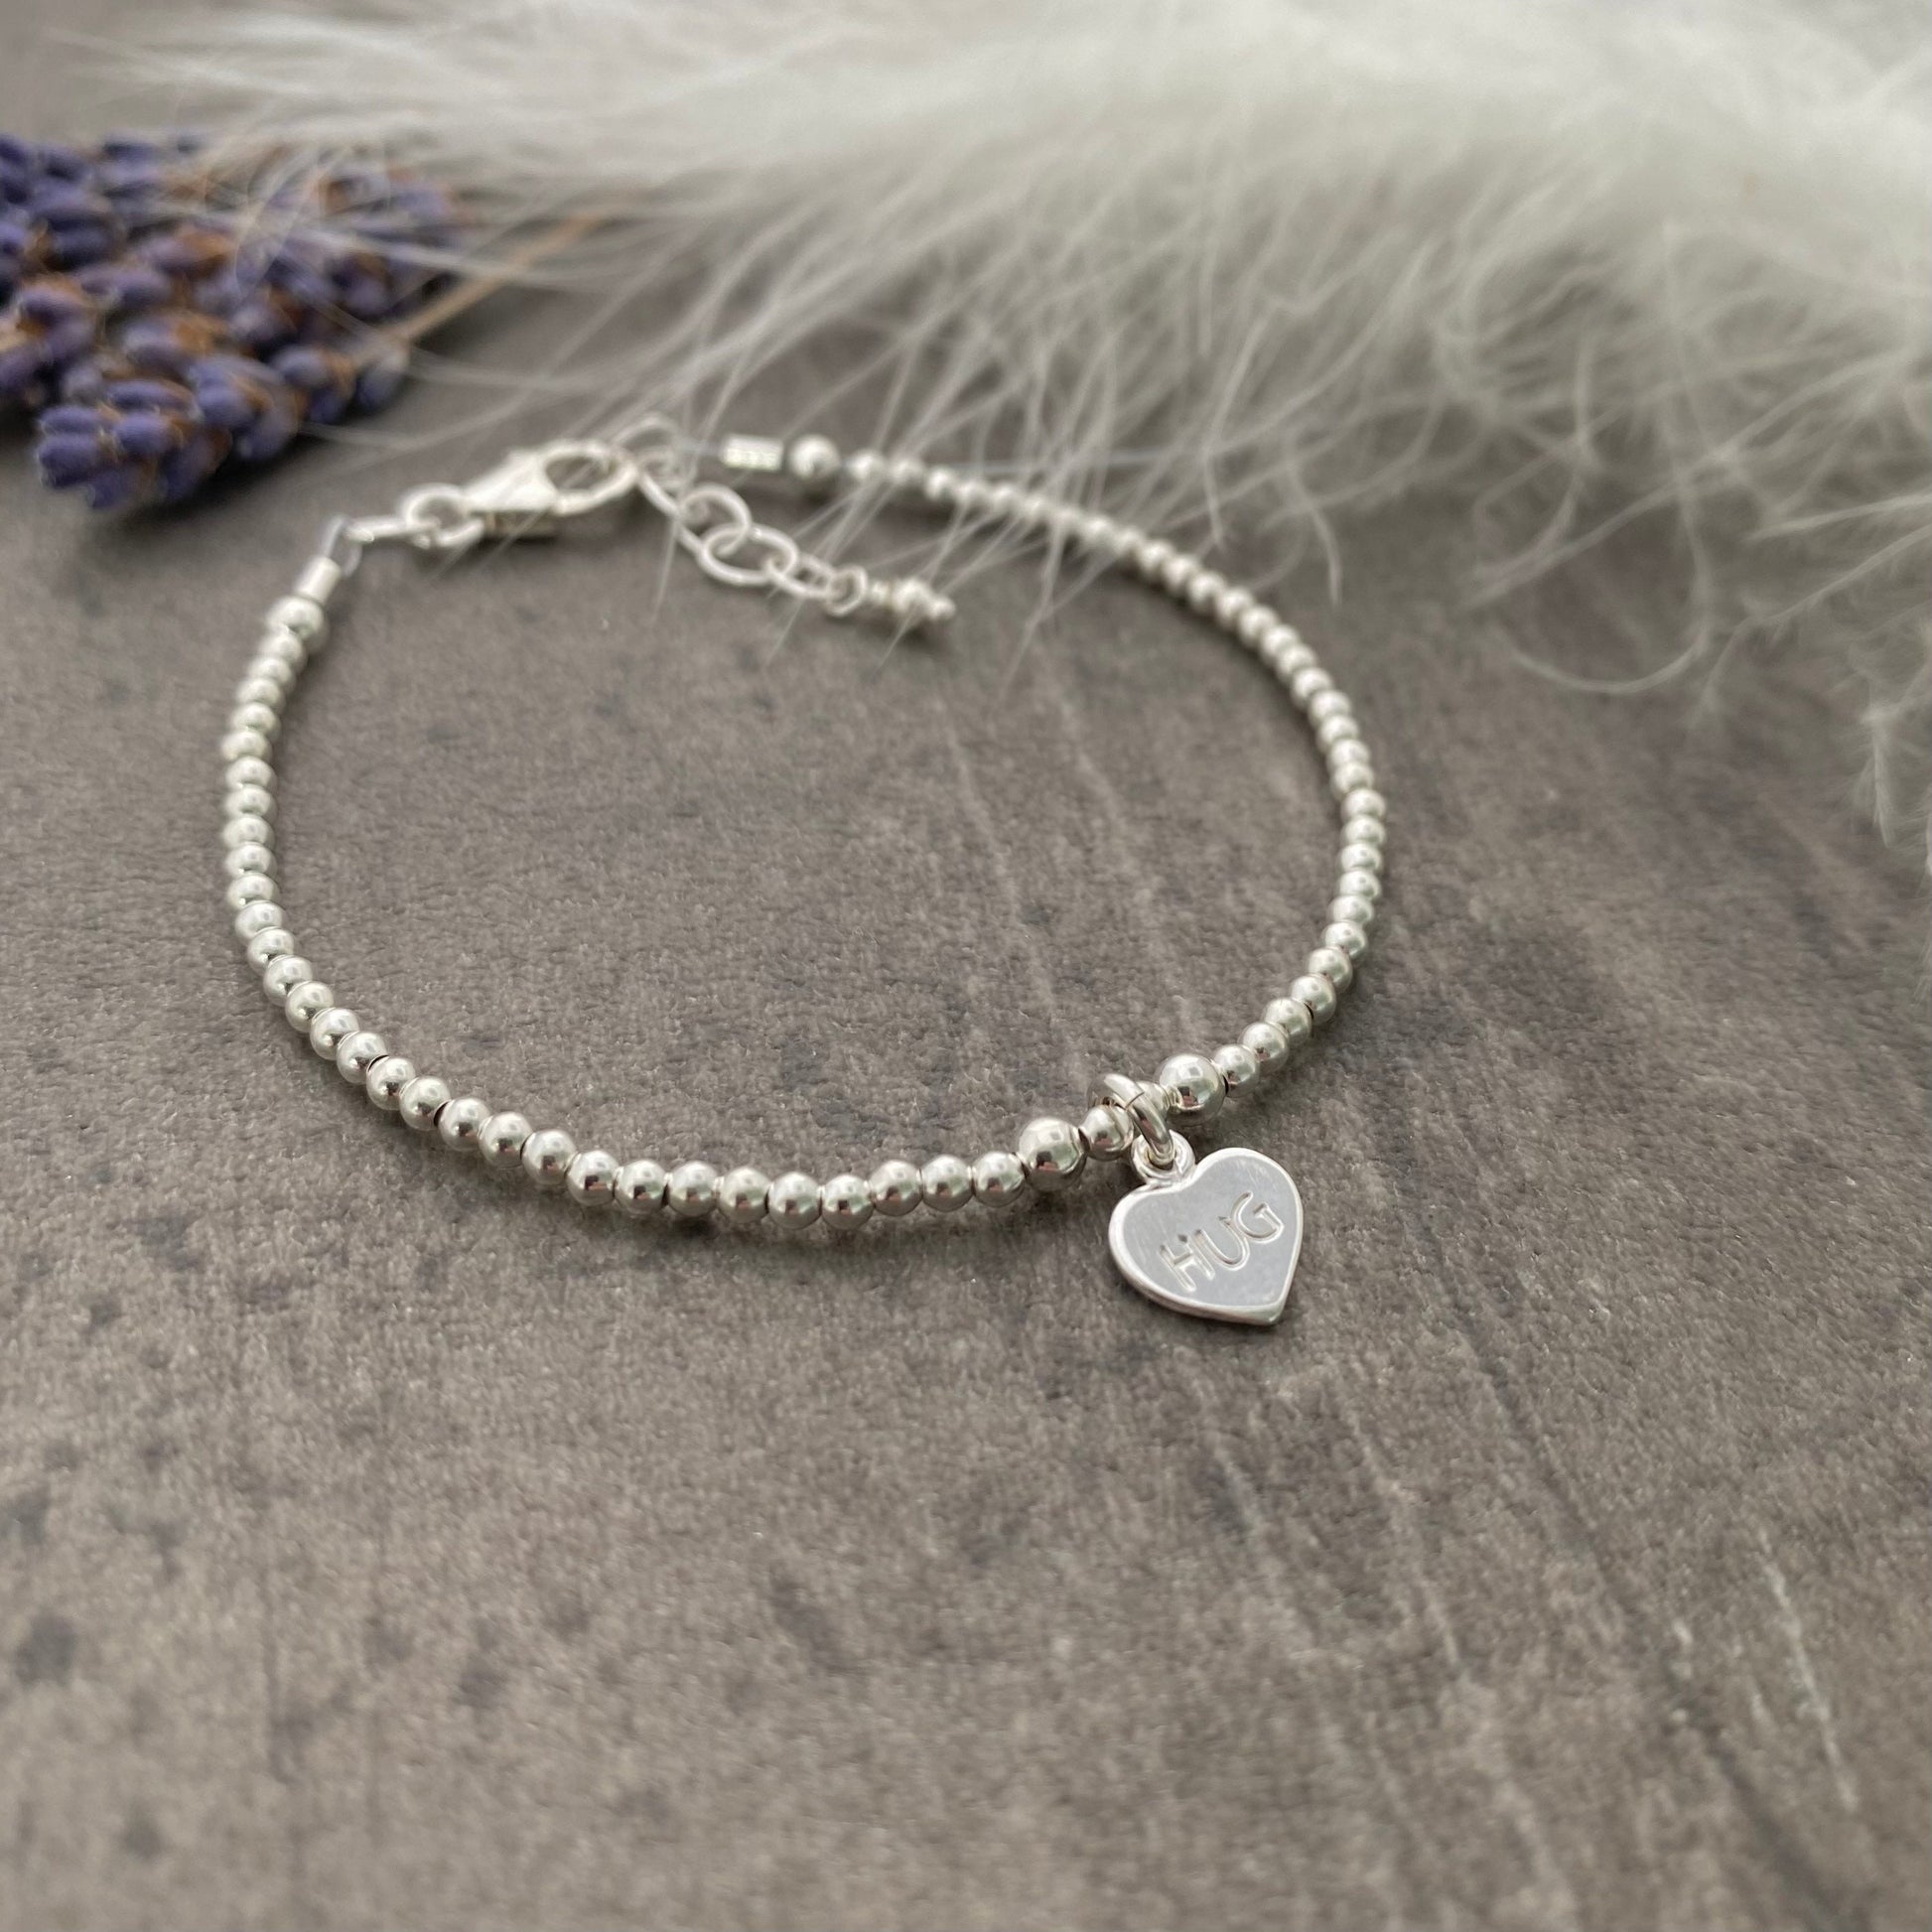 Dainty HUG Bracelet in Sterling Silver, Lockdown Gifts for Loved ones